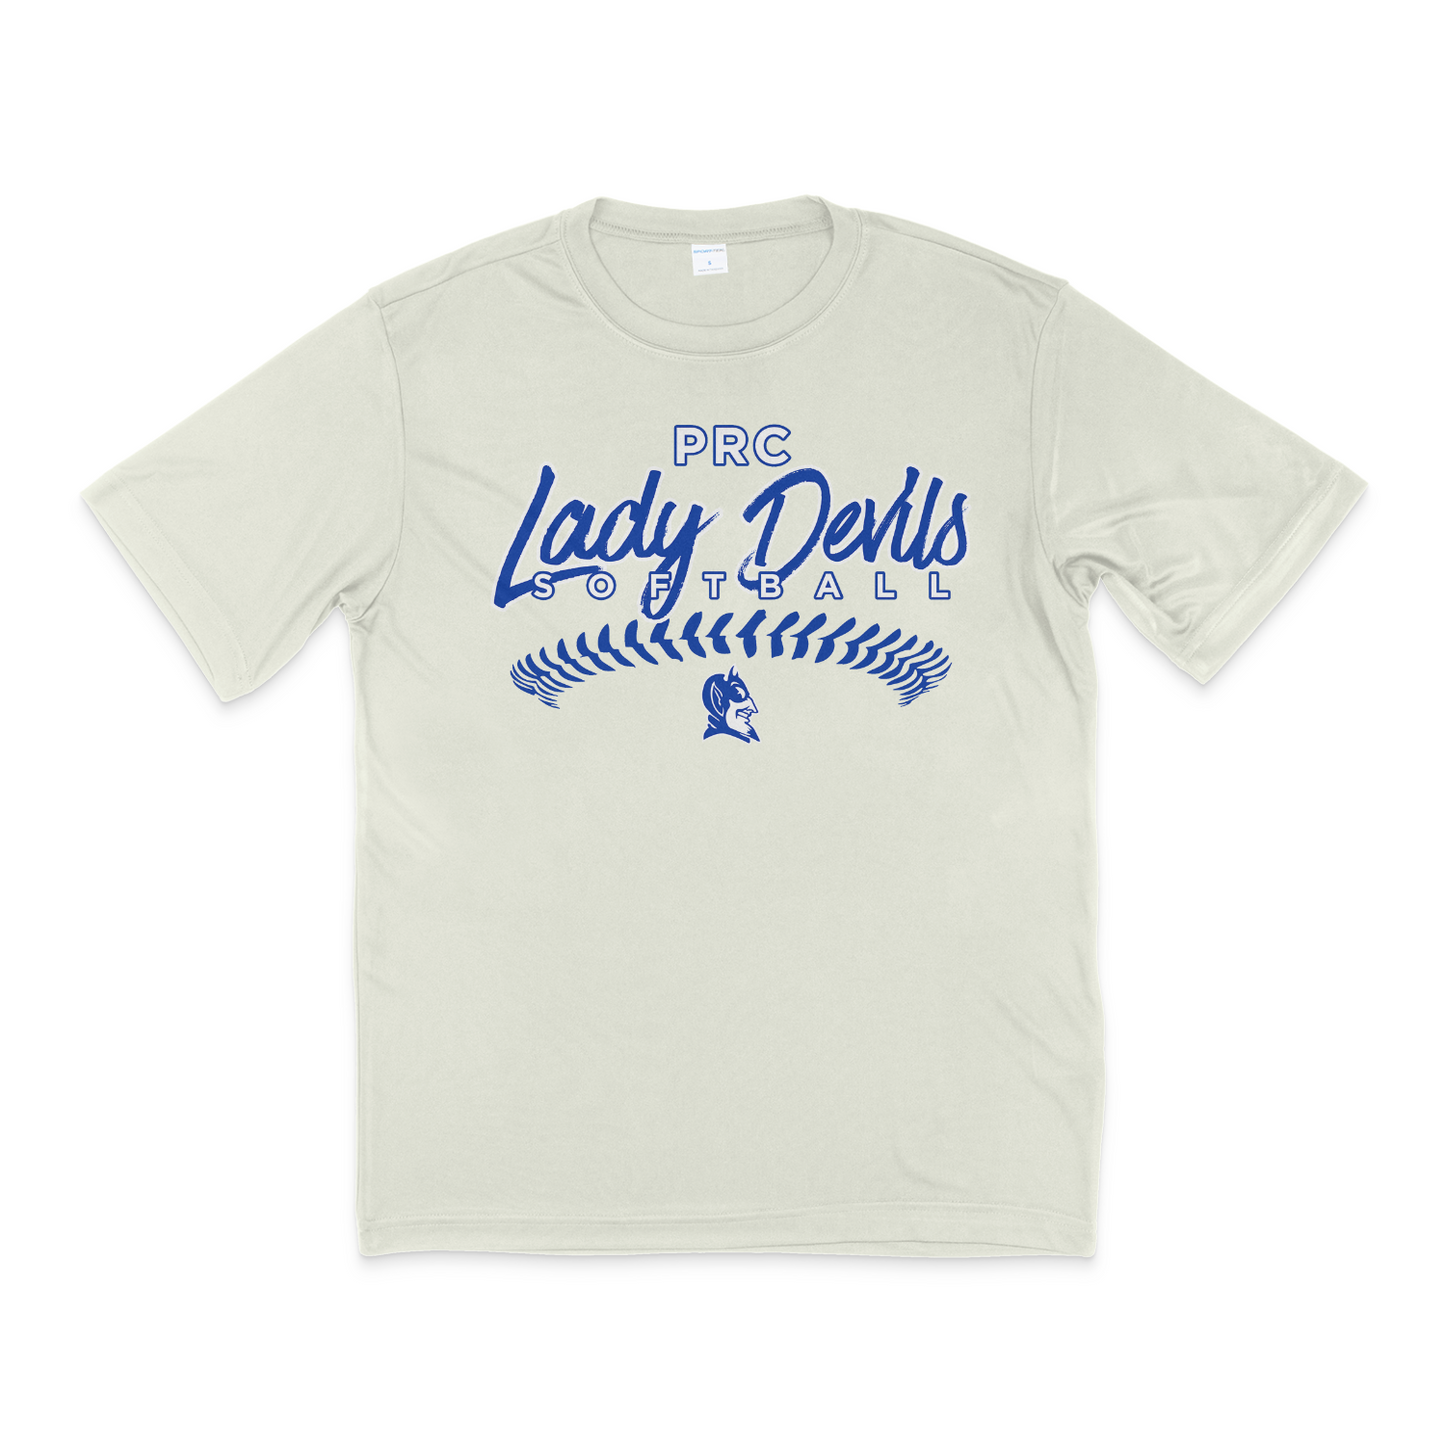 Dryfit Tee - Lady Devils Softball